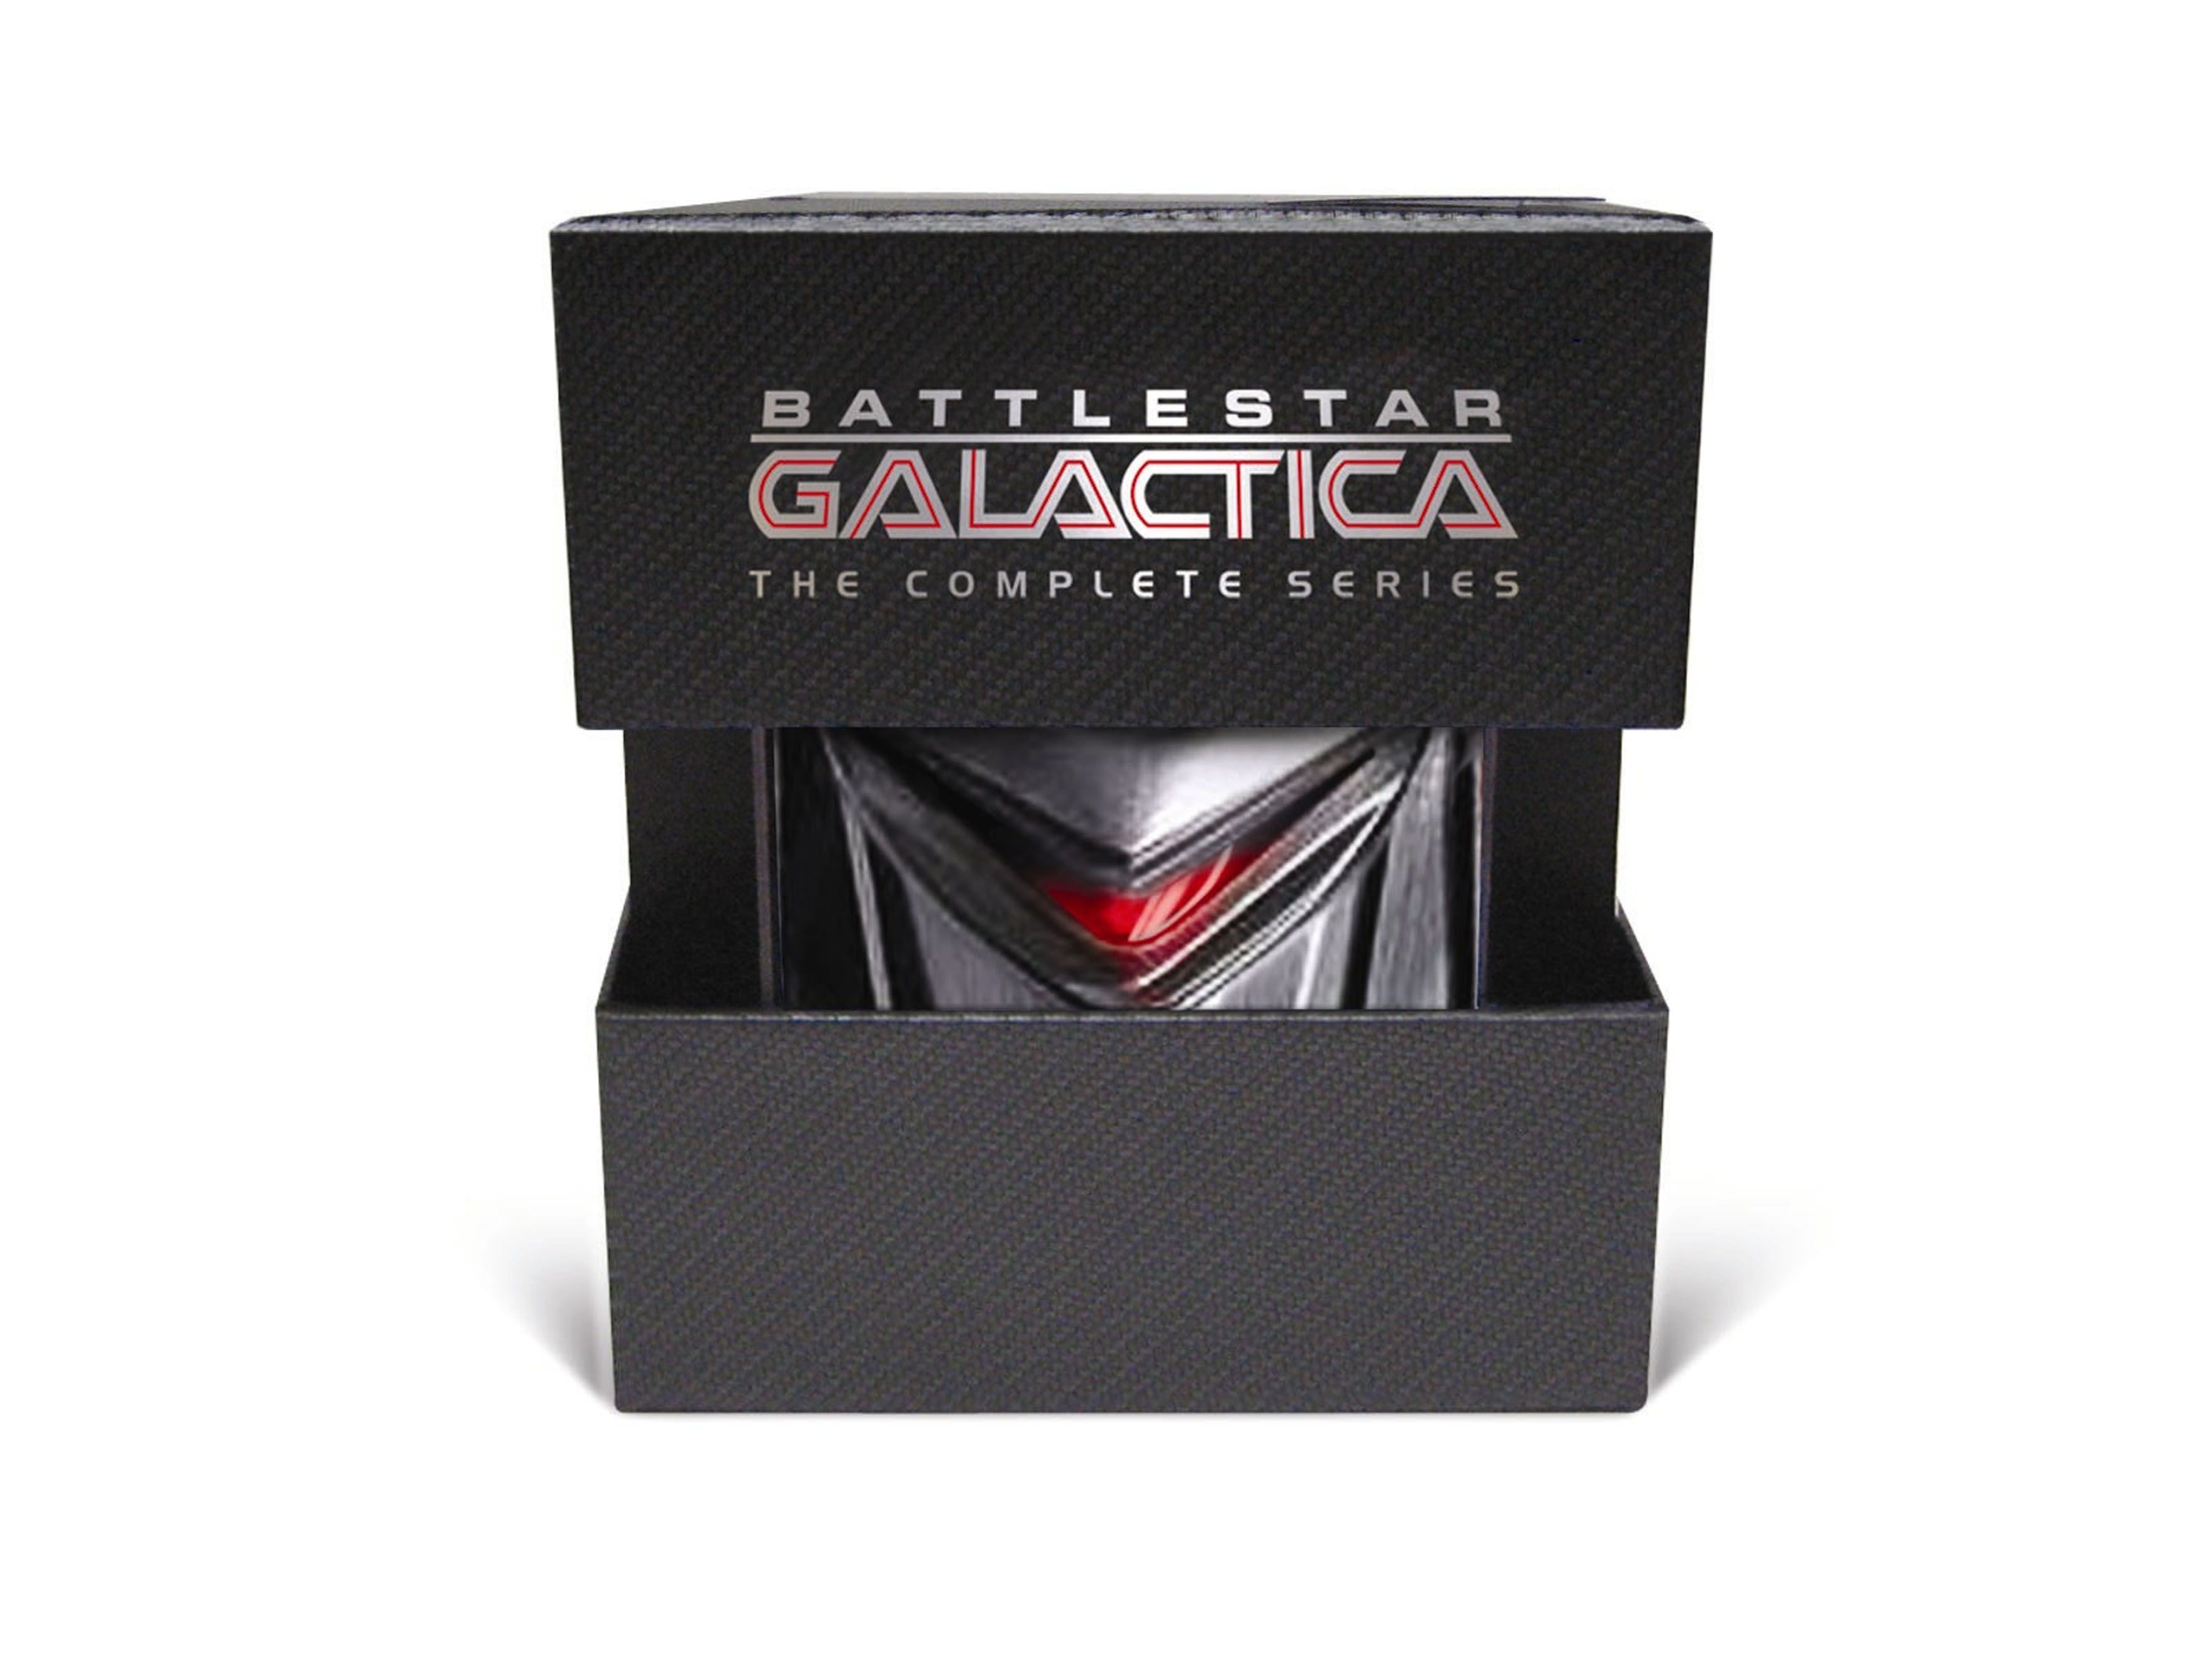 Battlestar Galactica: The Complete Series DVD Blu-ray #1